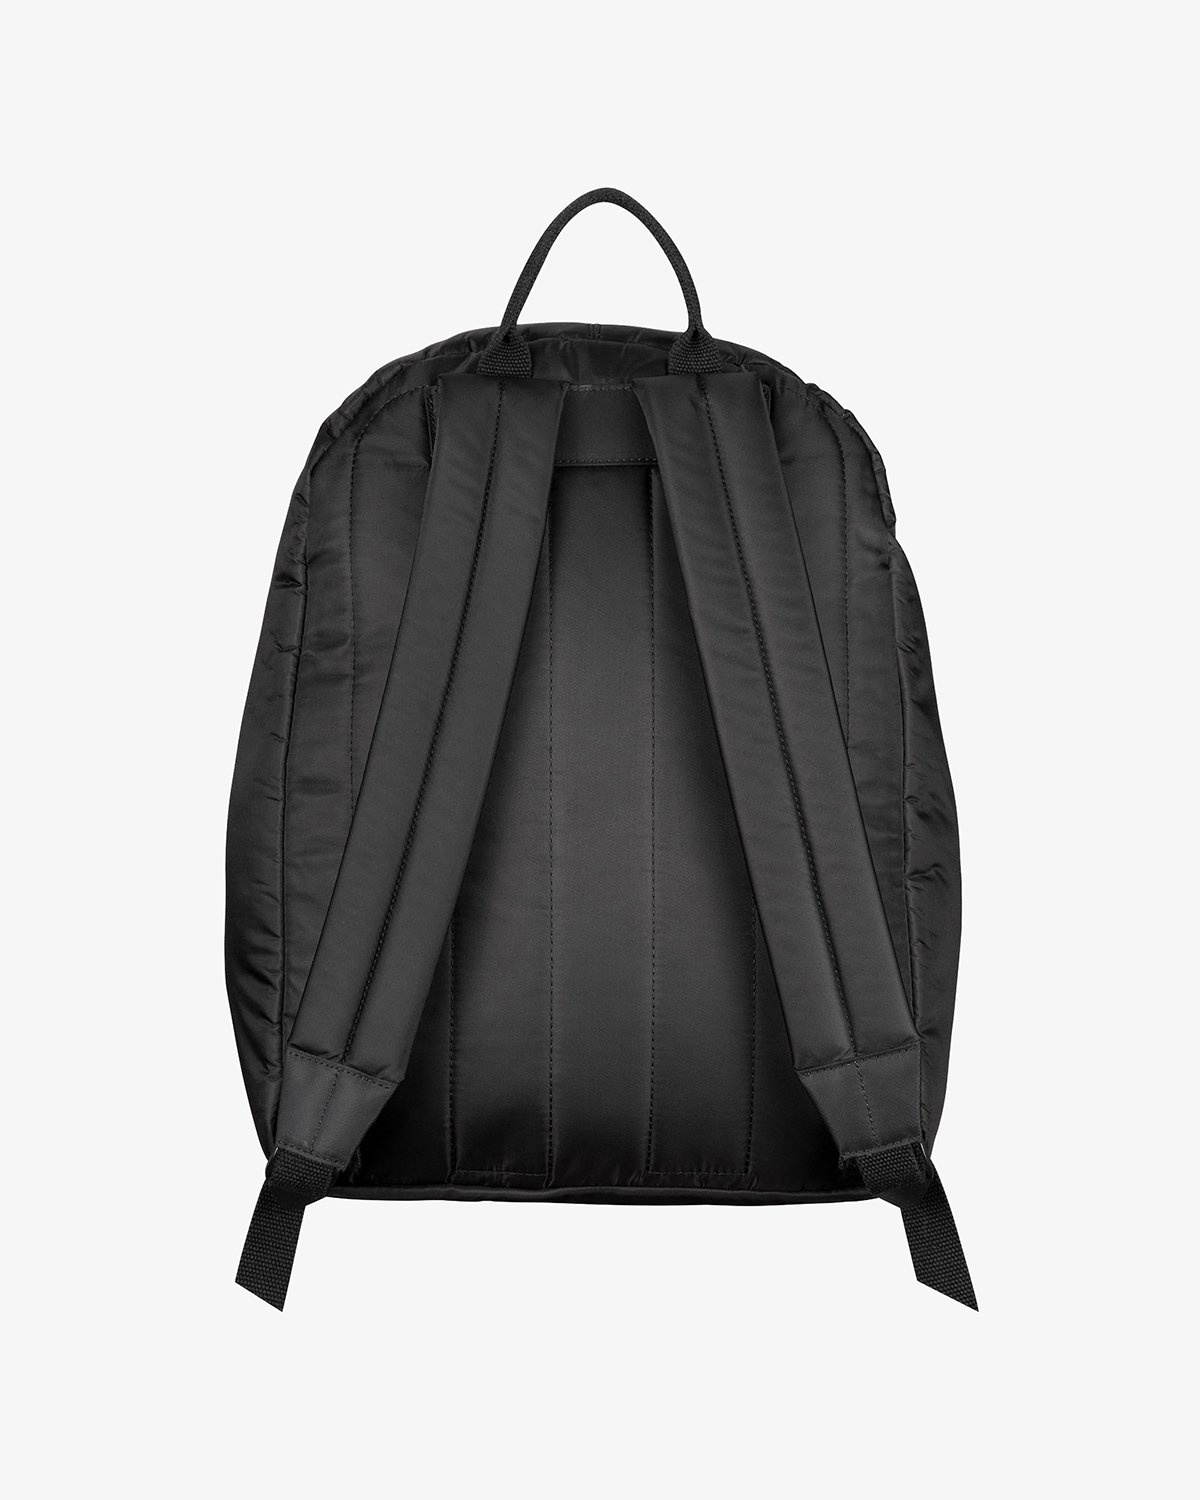 A.P.C. x JJJJound – Backpack Black - Bags - Black - Image 3